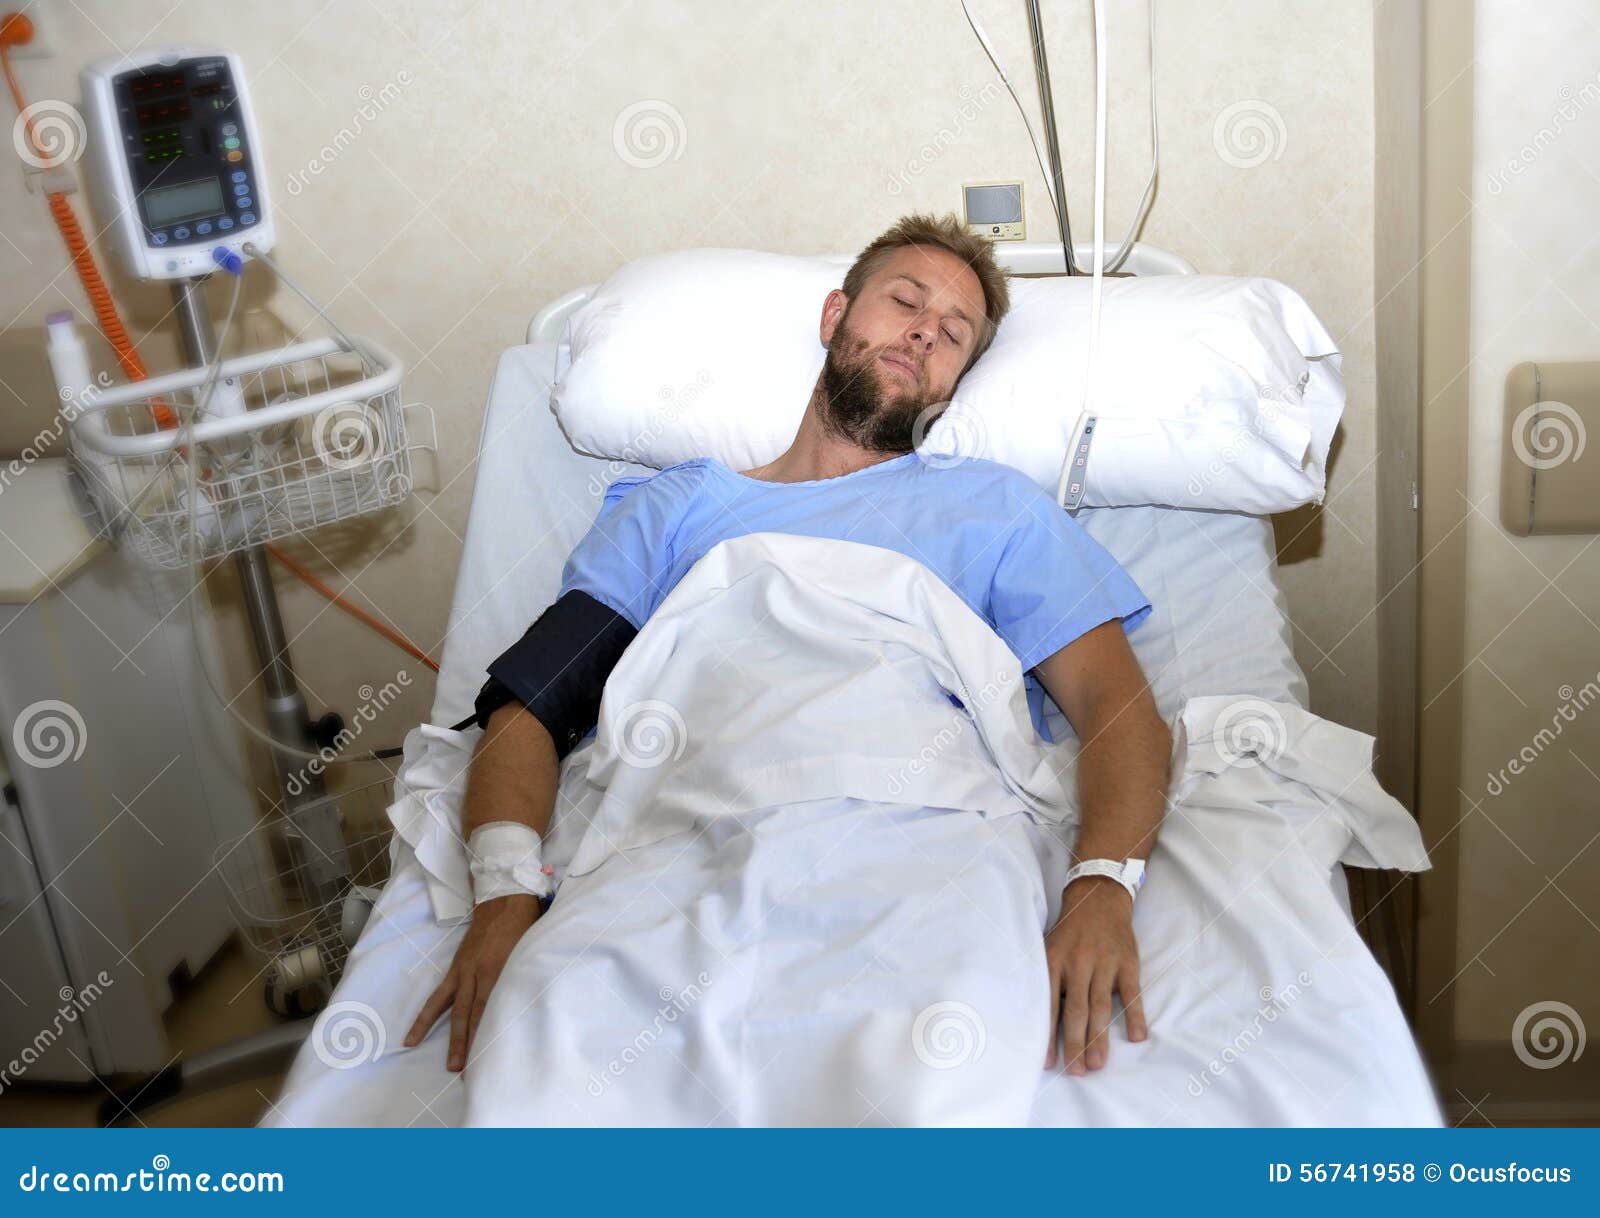 Boy sleeping in hospital bed - Stock Photo - Dissolve